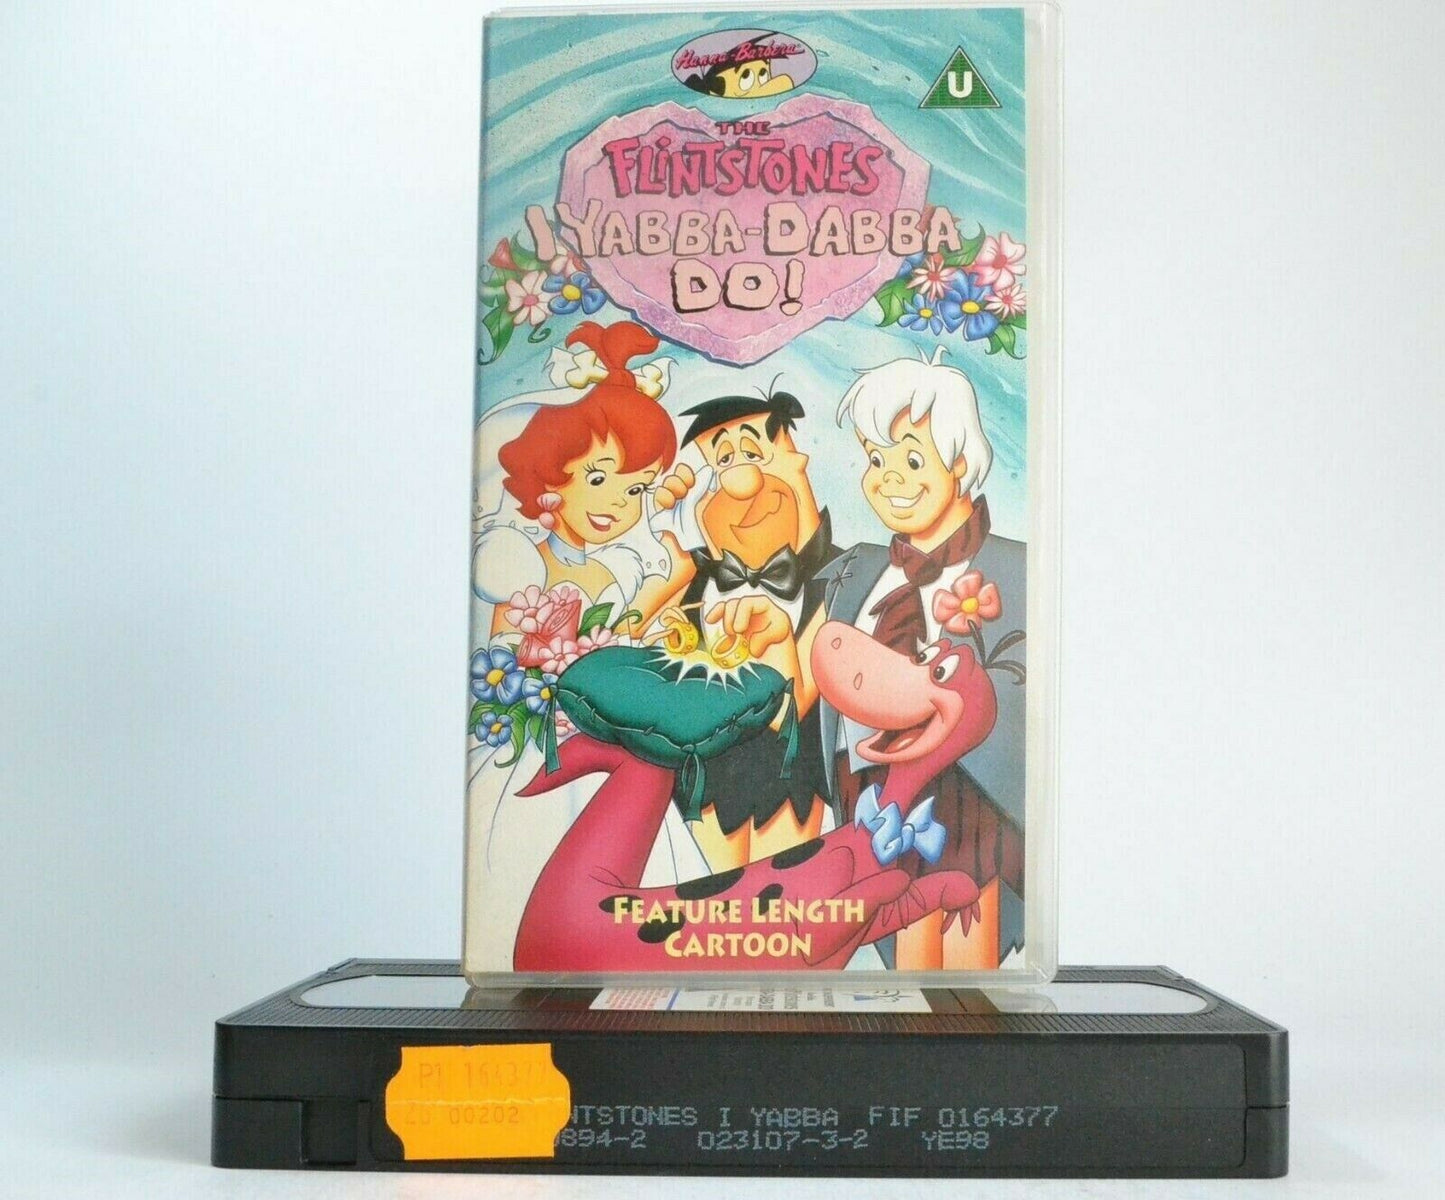 The Flintstones: I Yabba-Dabba Do! (1993) - Animated Comedy - Children's - VHS-